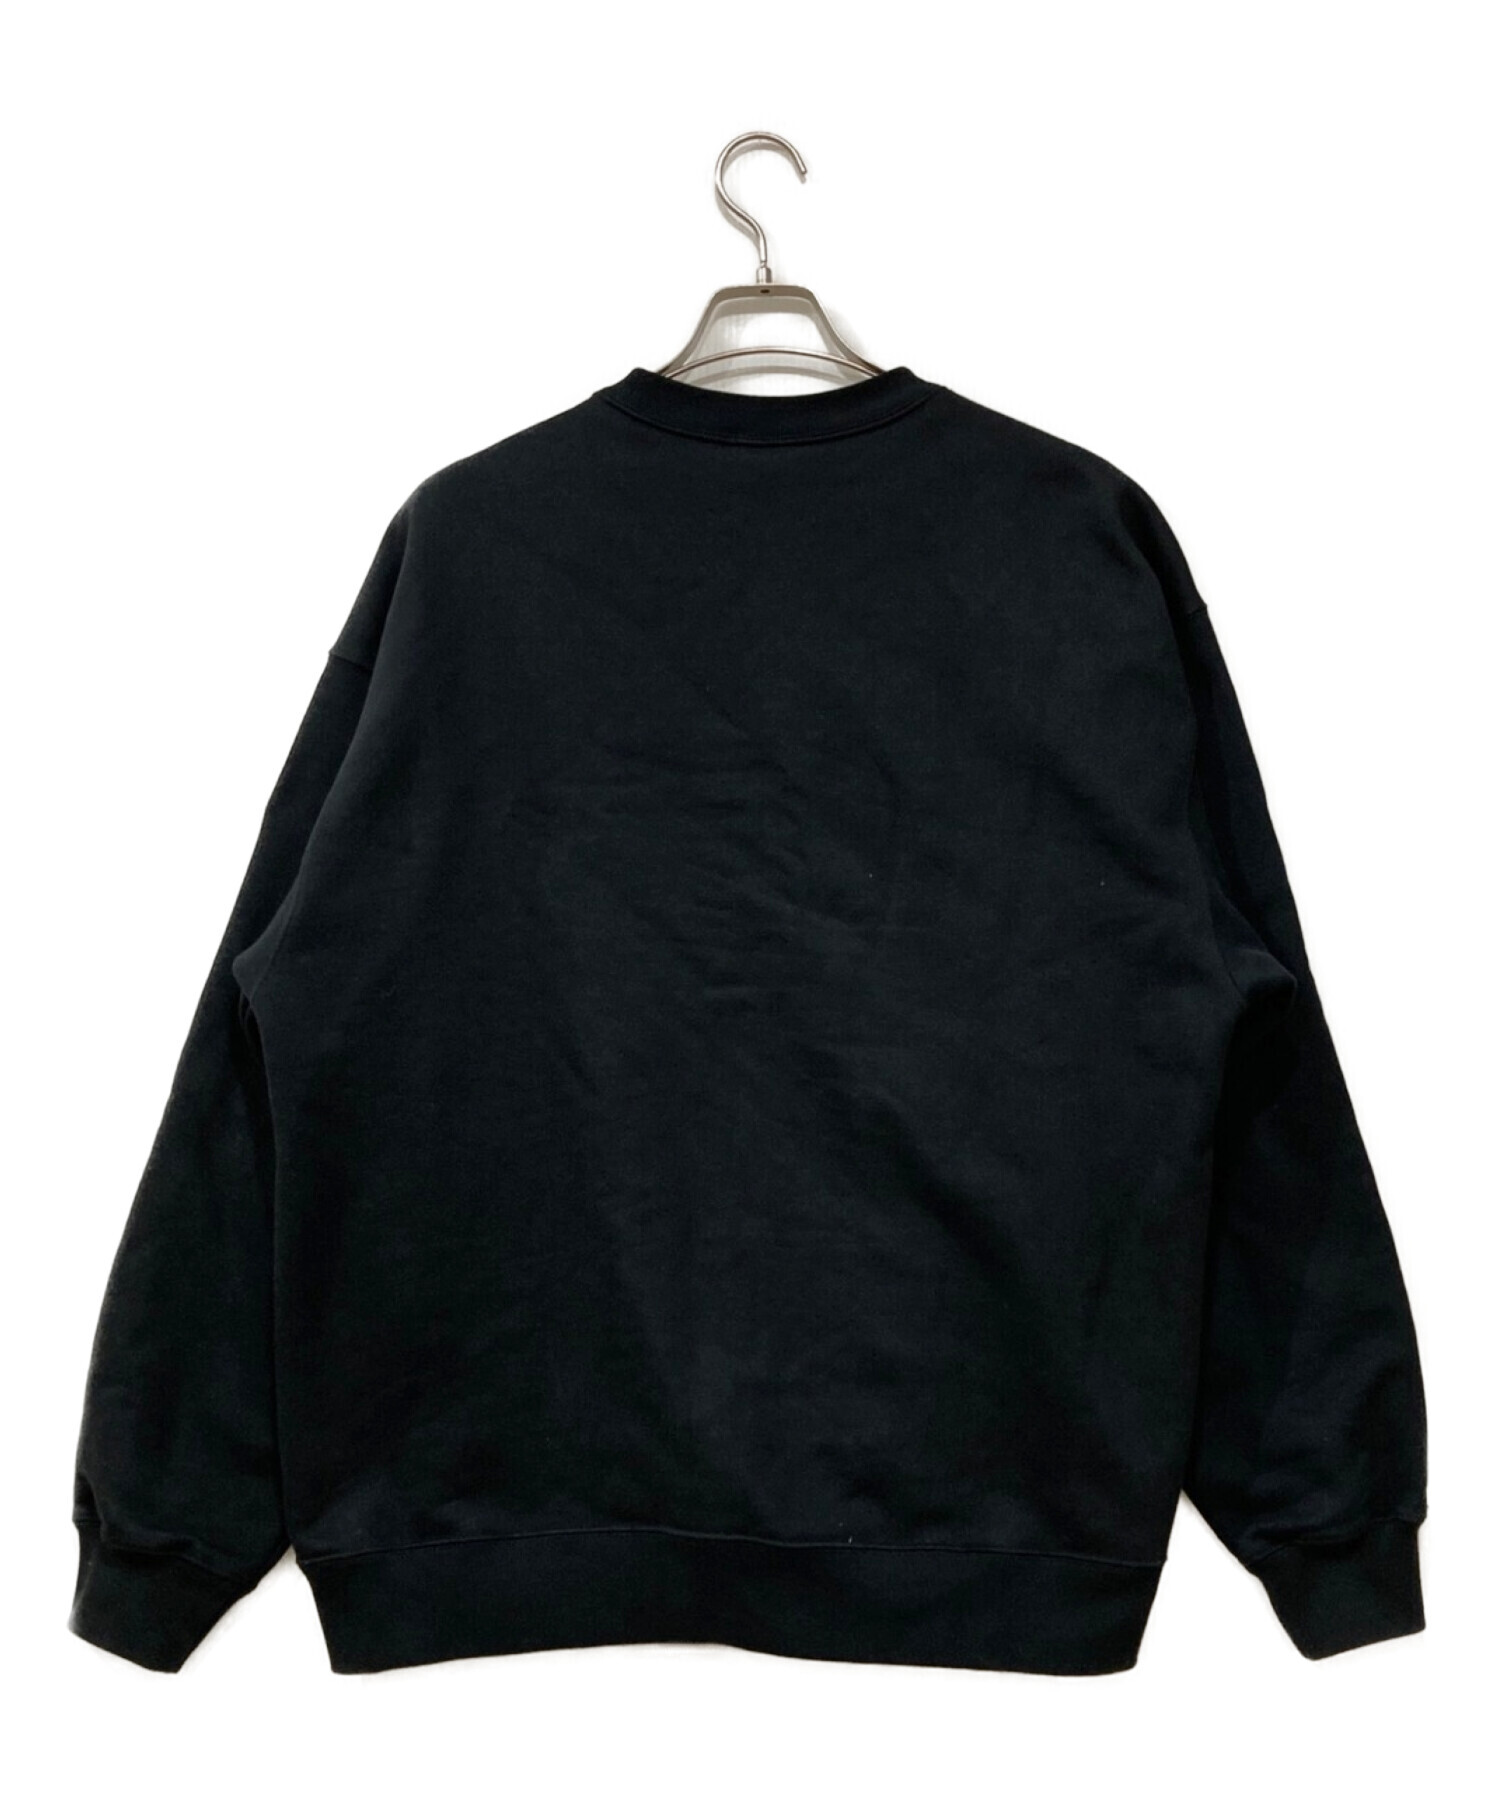 NIKE (ナイキ) stussy (ステューシー) Fleece Crew Sweatshirt ブラック サイズ:M